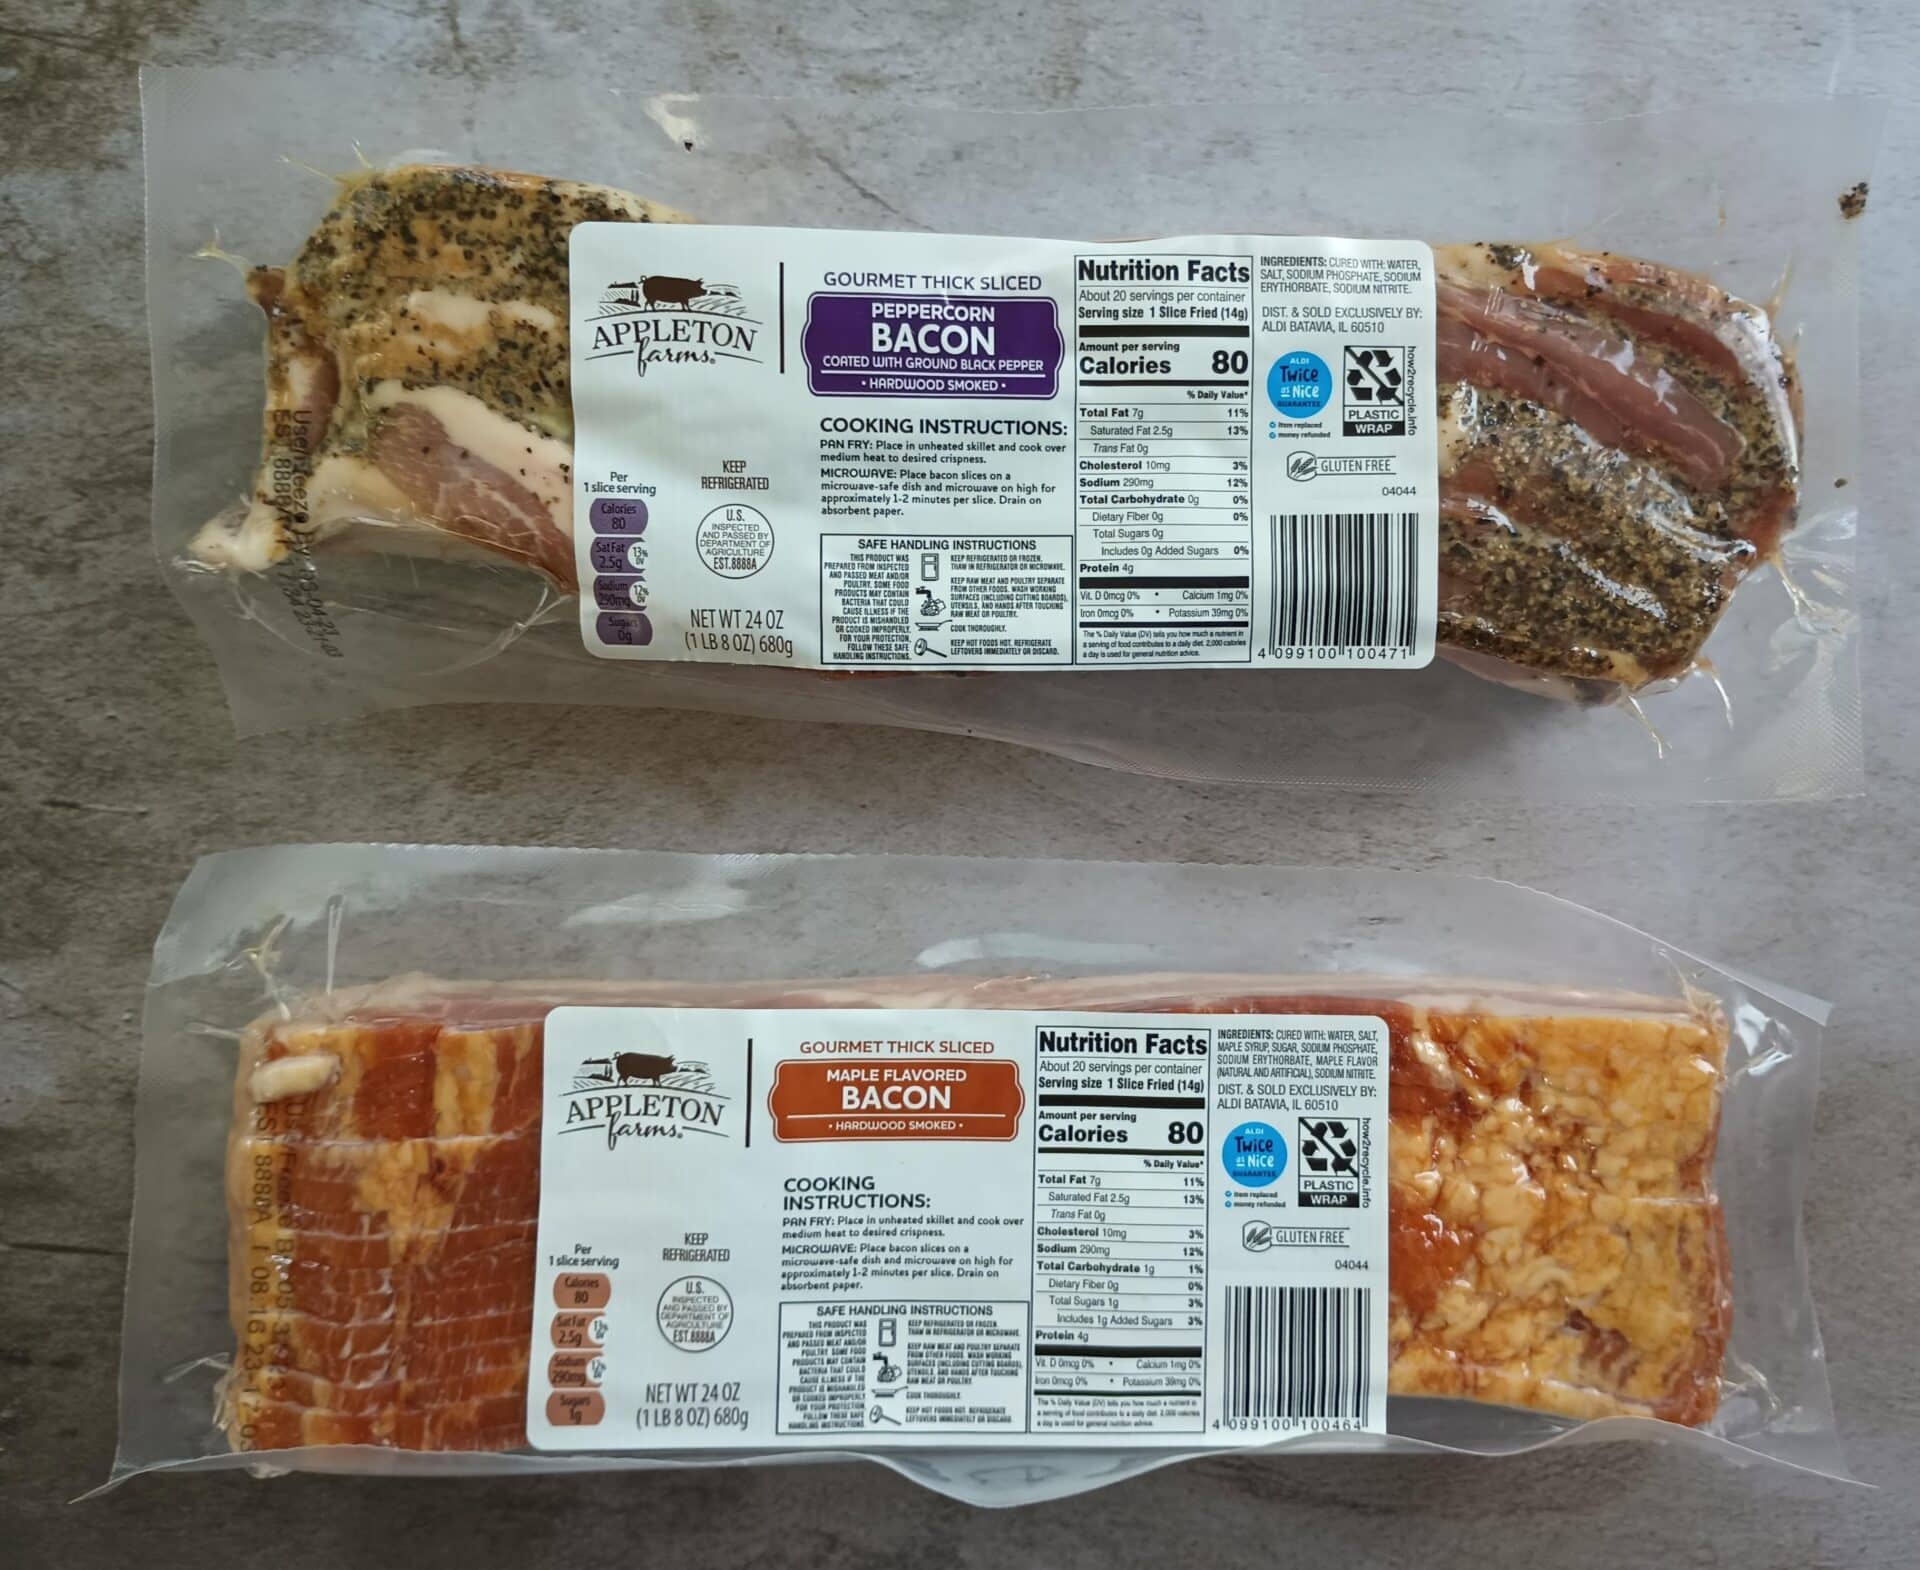 Appleton Farms Gourmet Thick Sliced Bacon